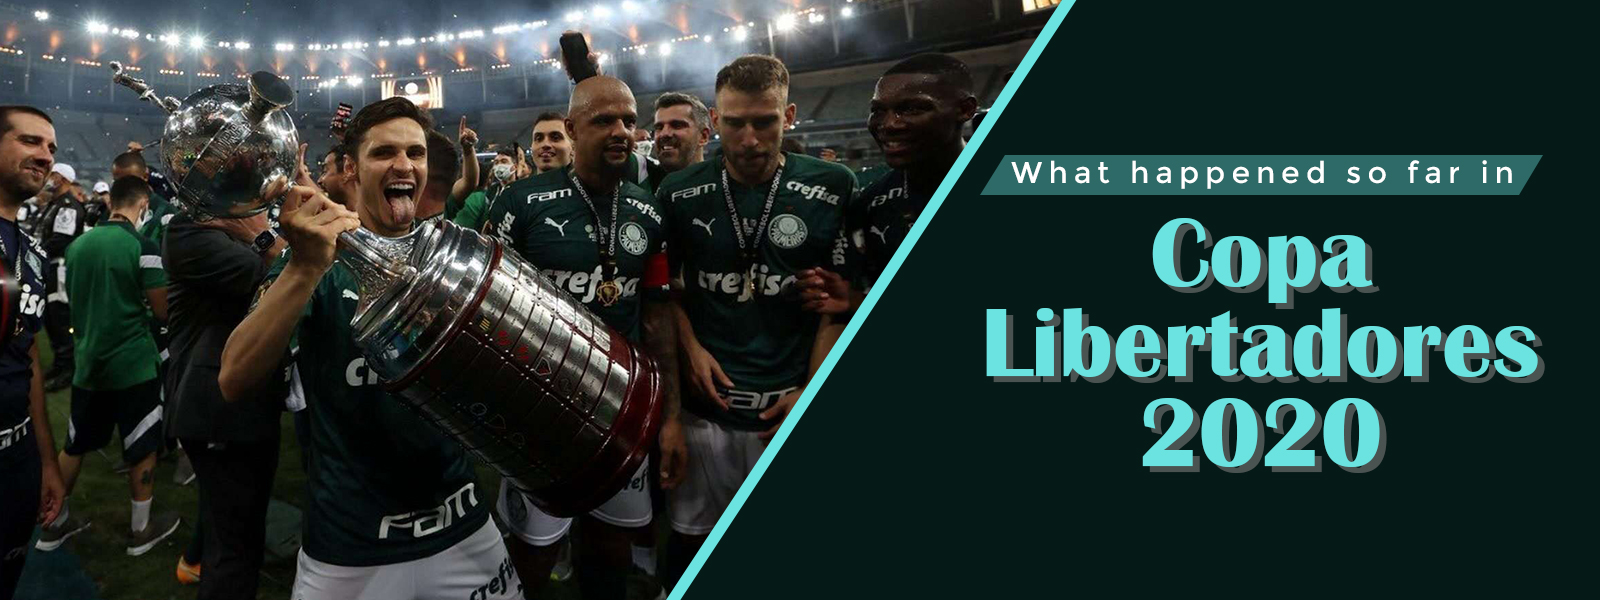 What happened so far in Copa Libertadores 2020